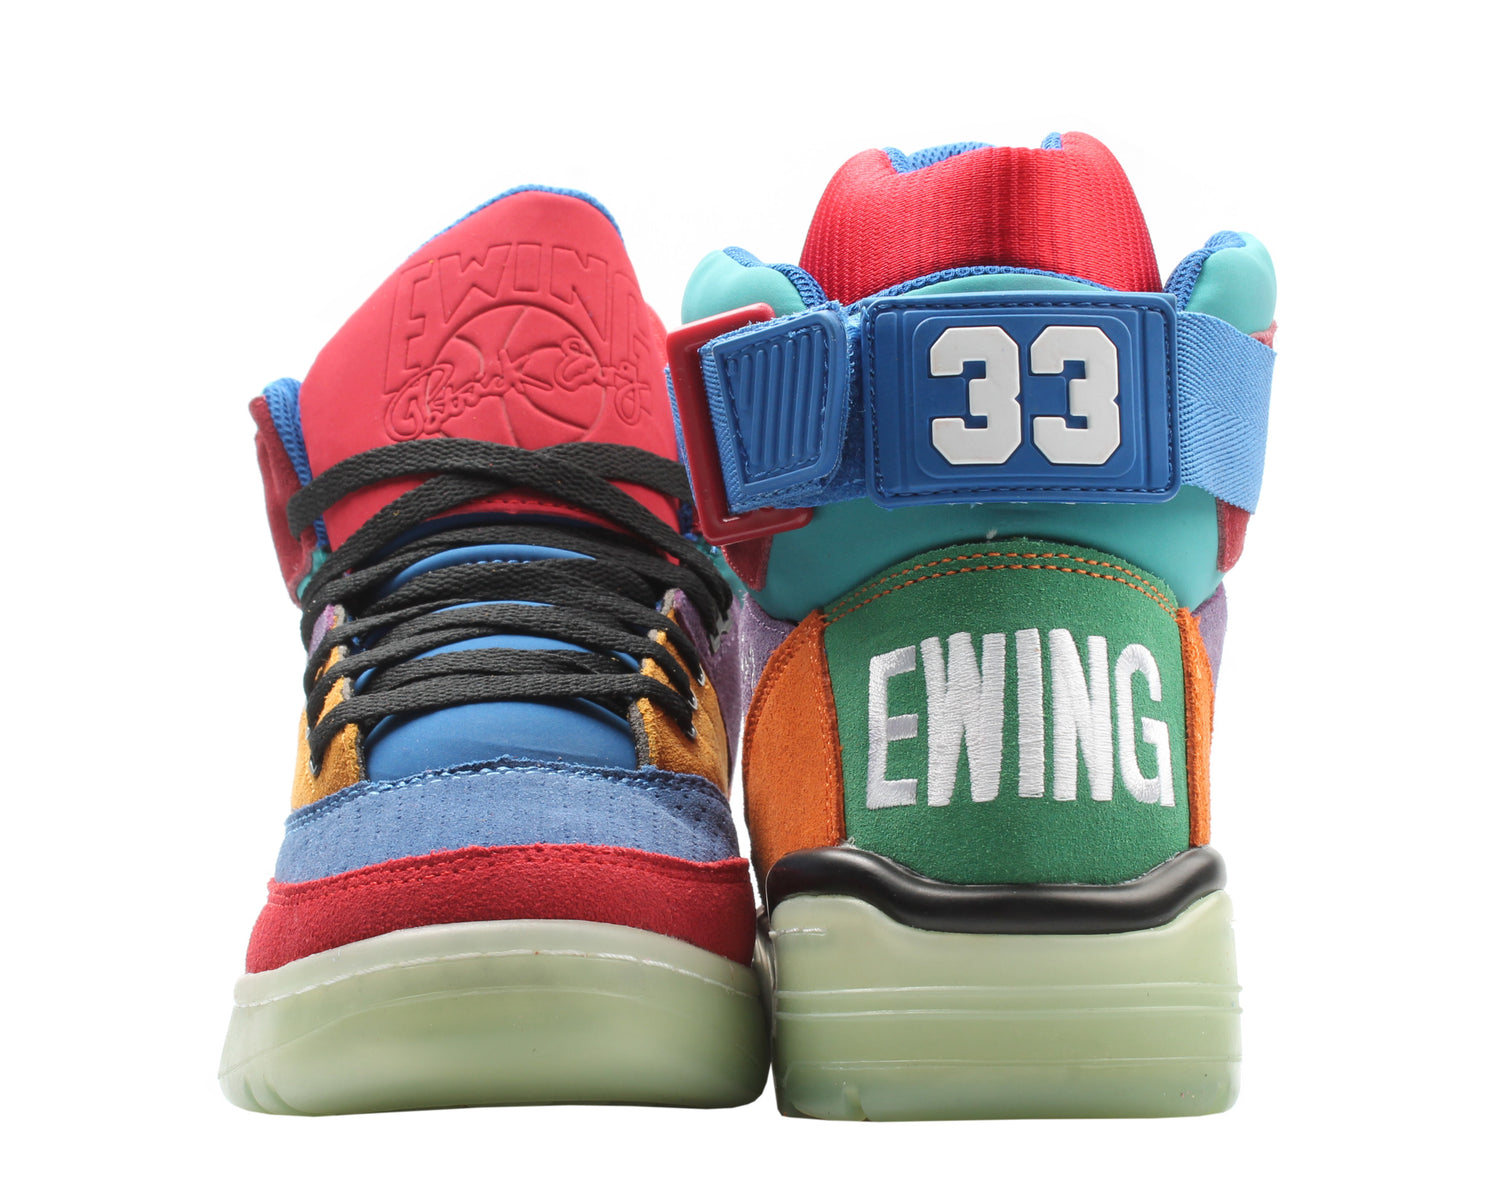 Ewing Athletics Ewing 33 Hi Remix Men's Basketball Shoes